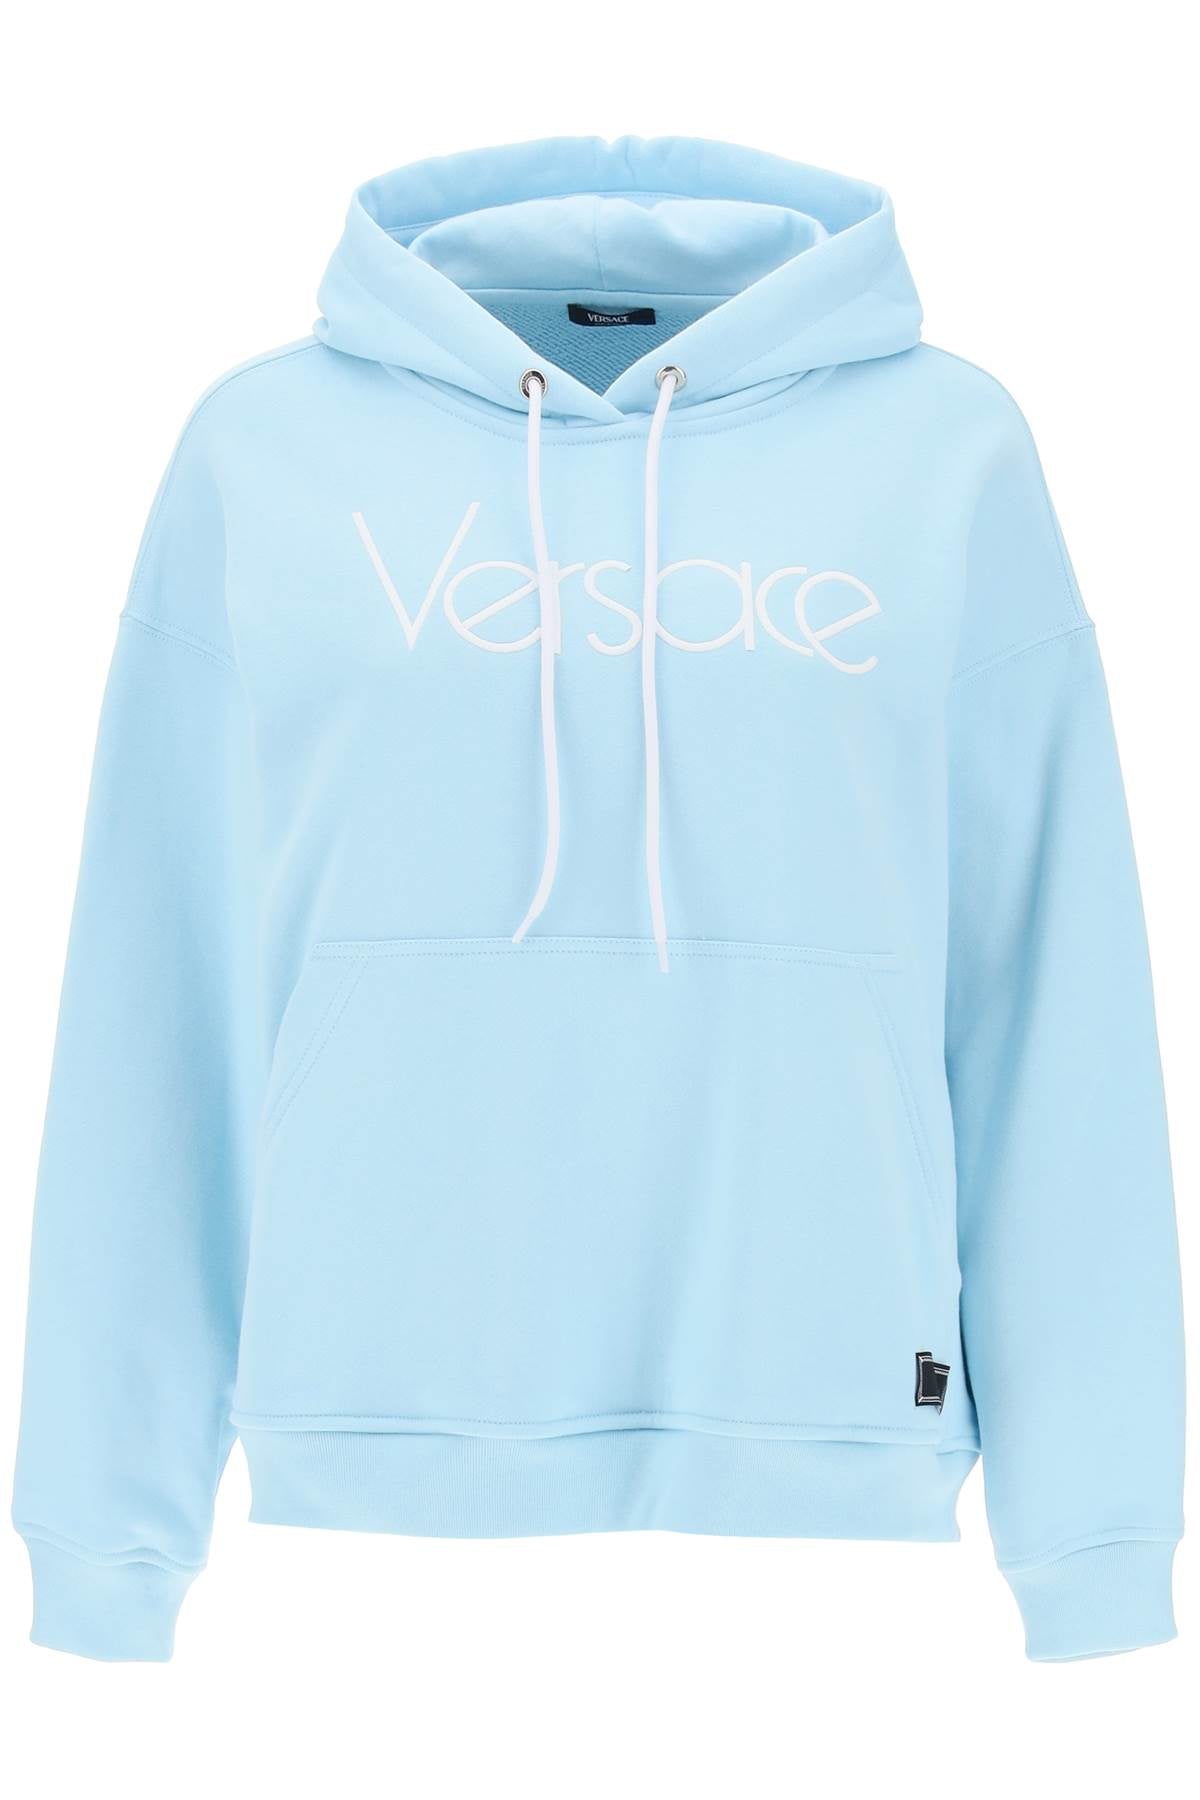 Versace 1978 Re-edition Logo Hooded Sweatshirt In Light Blue For Women